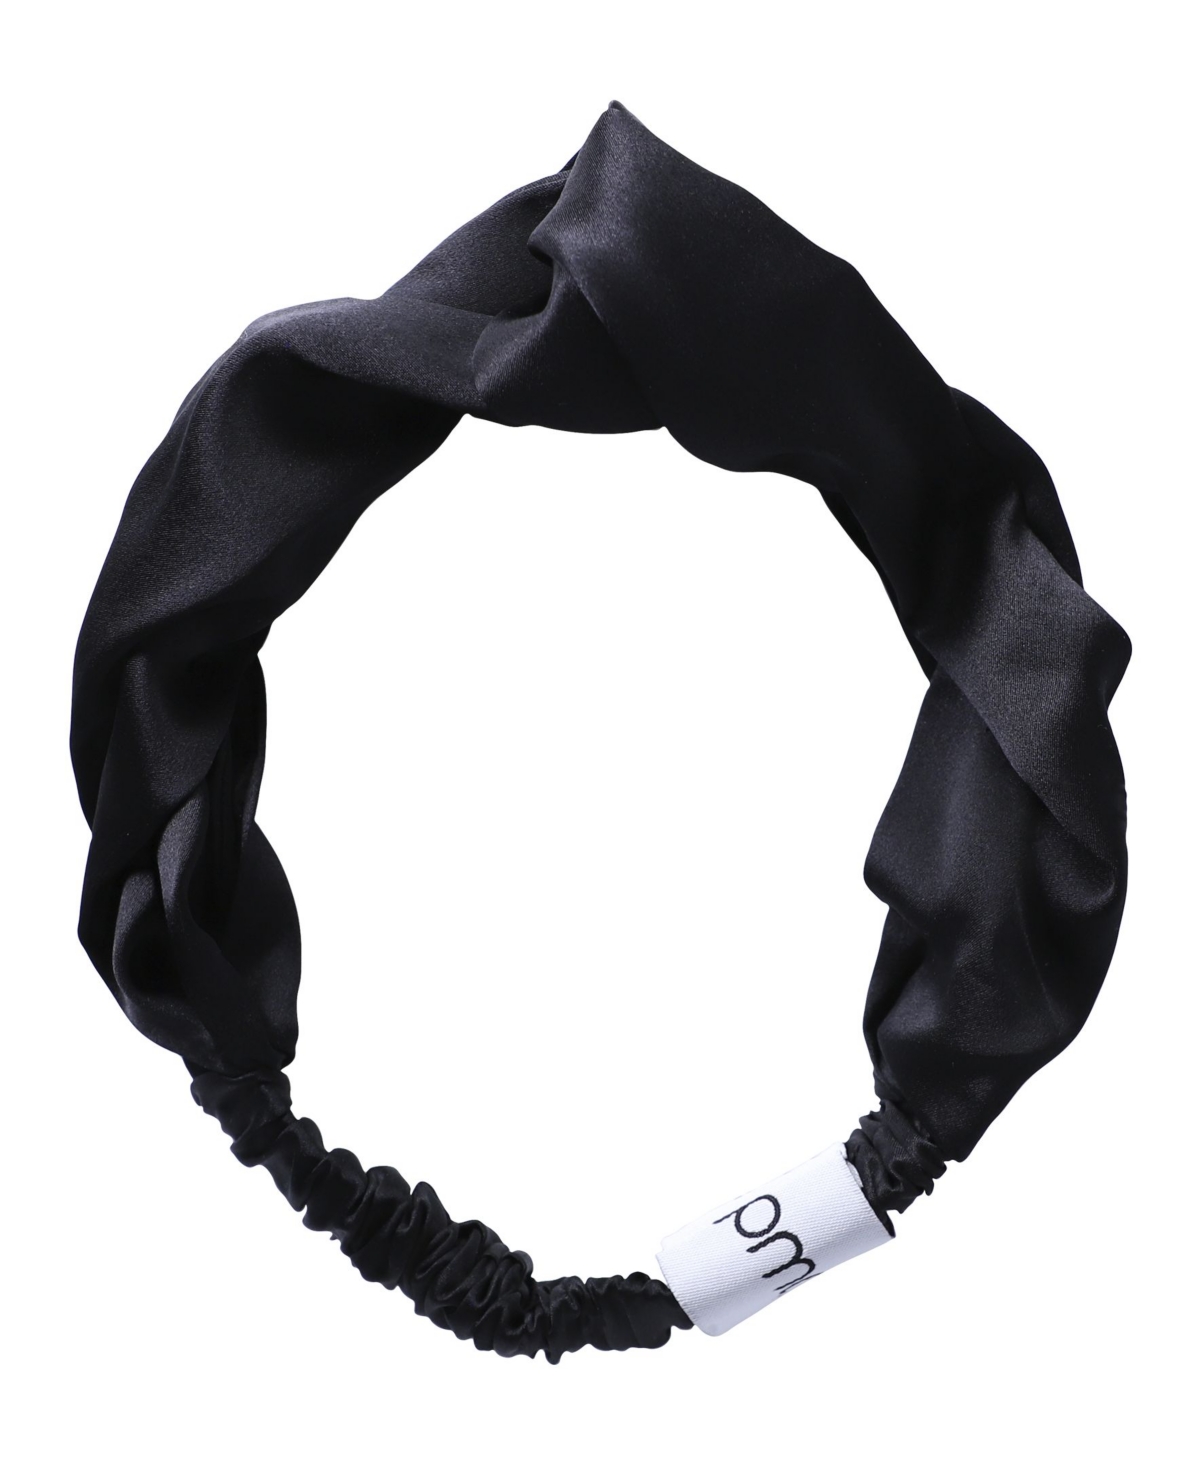 Silversilk Headband - Black